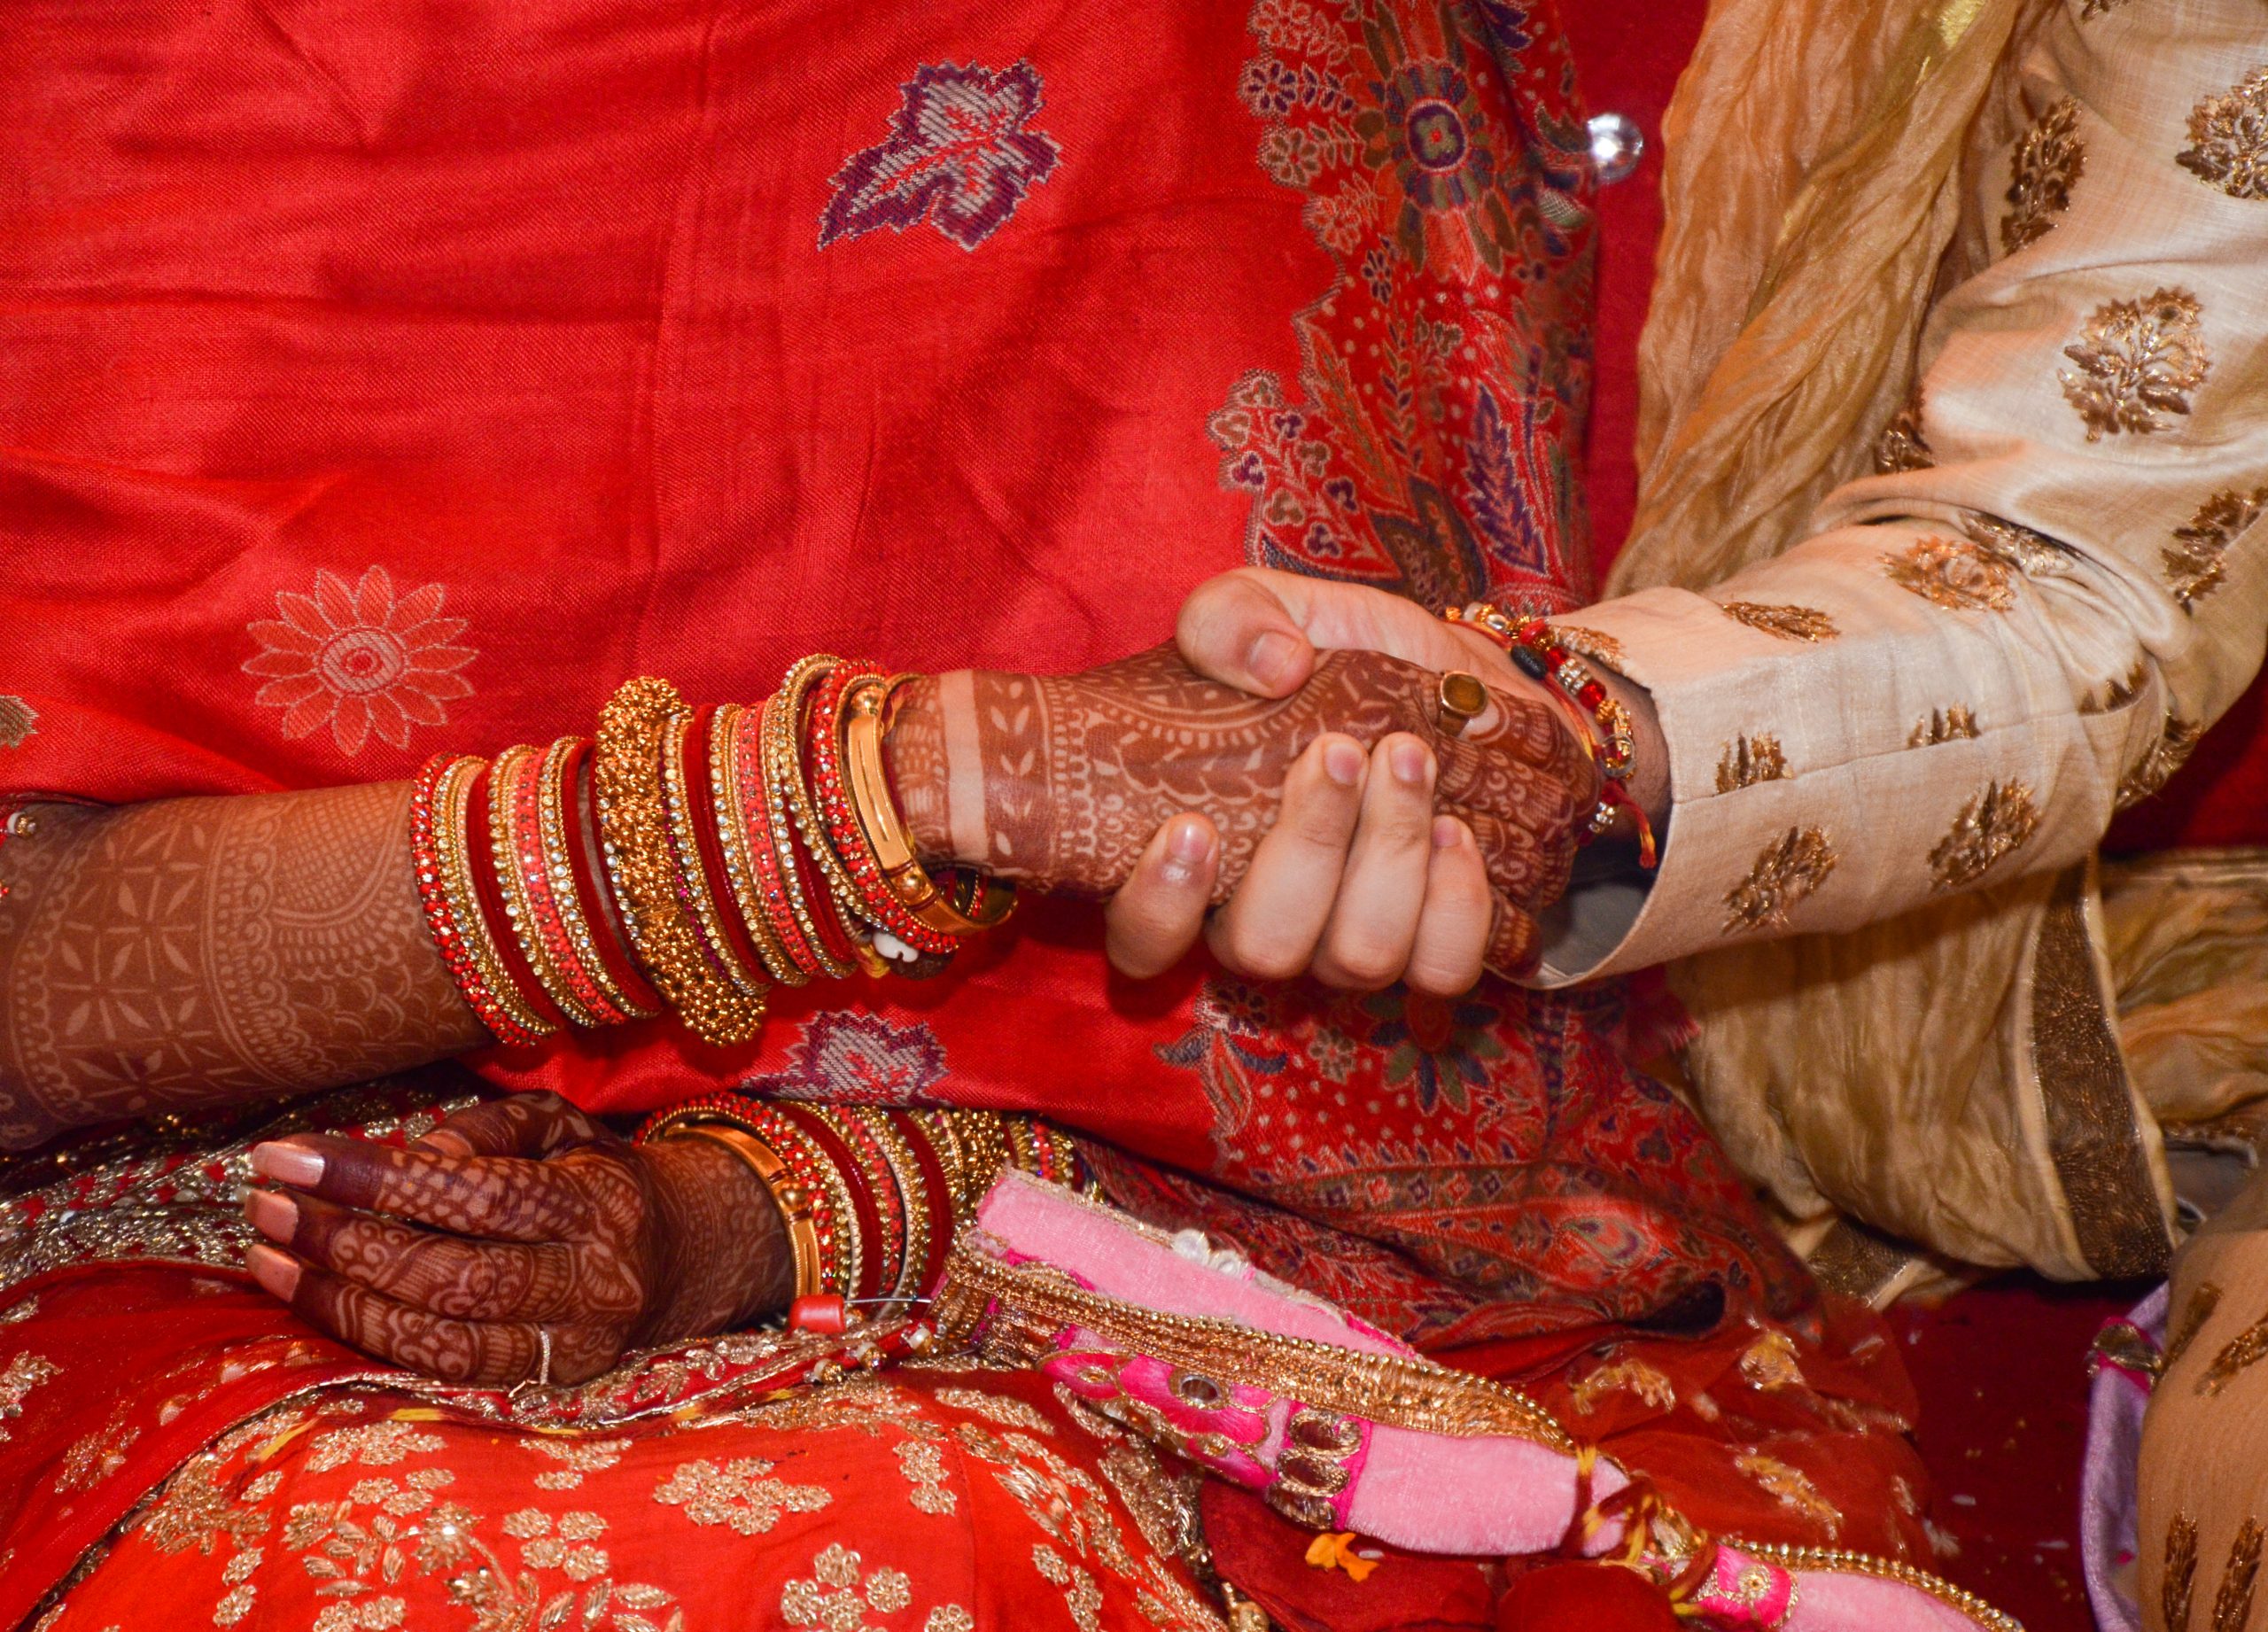 A wedding couple's hands